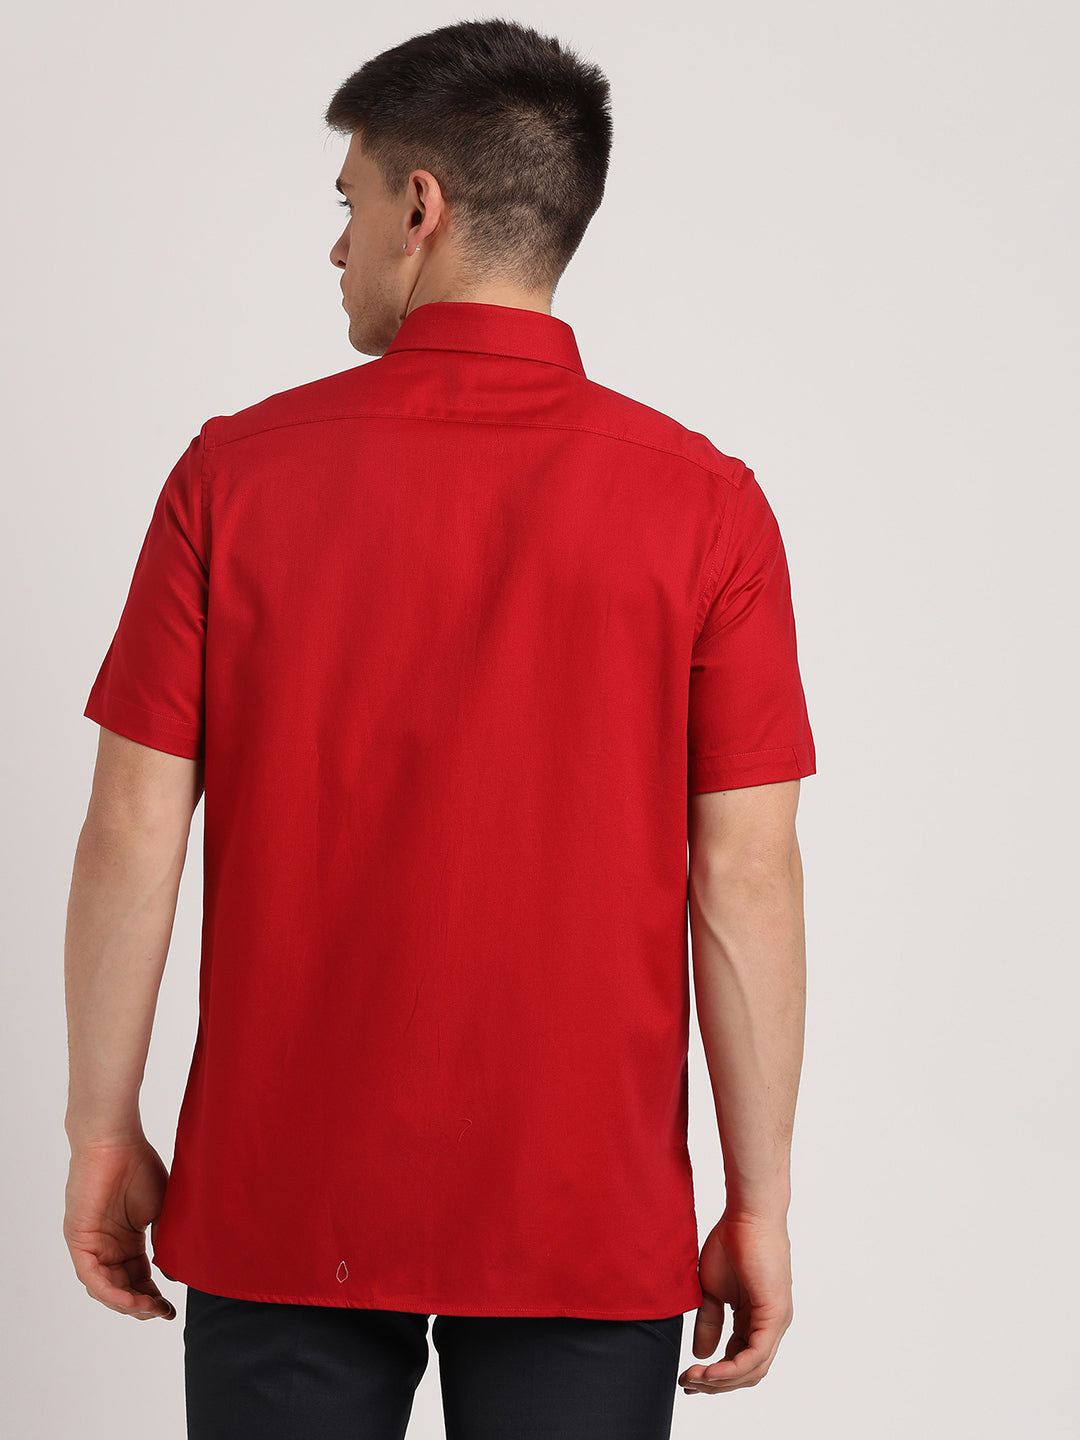 100% Cotton Red Dobby Regular Fit Half Sleeve Formal Shirt